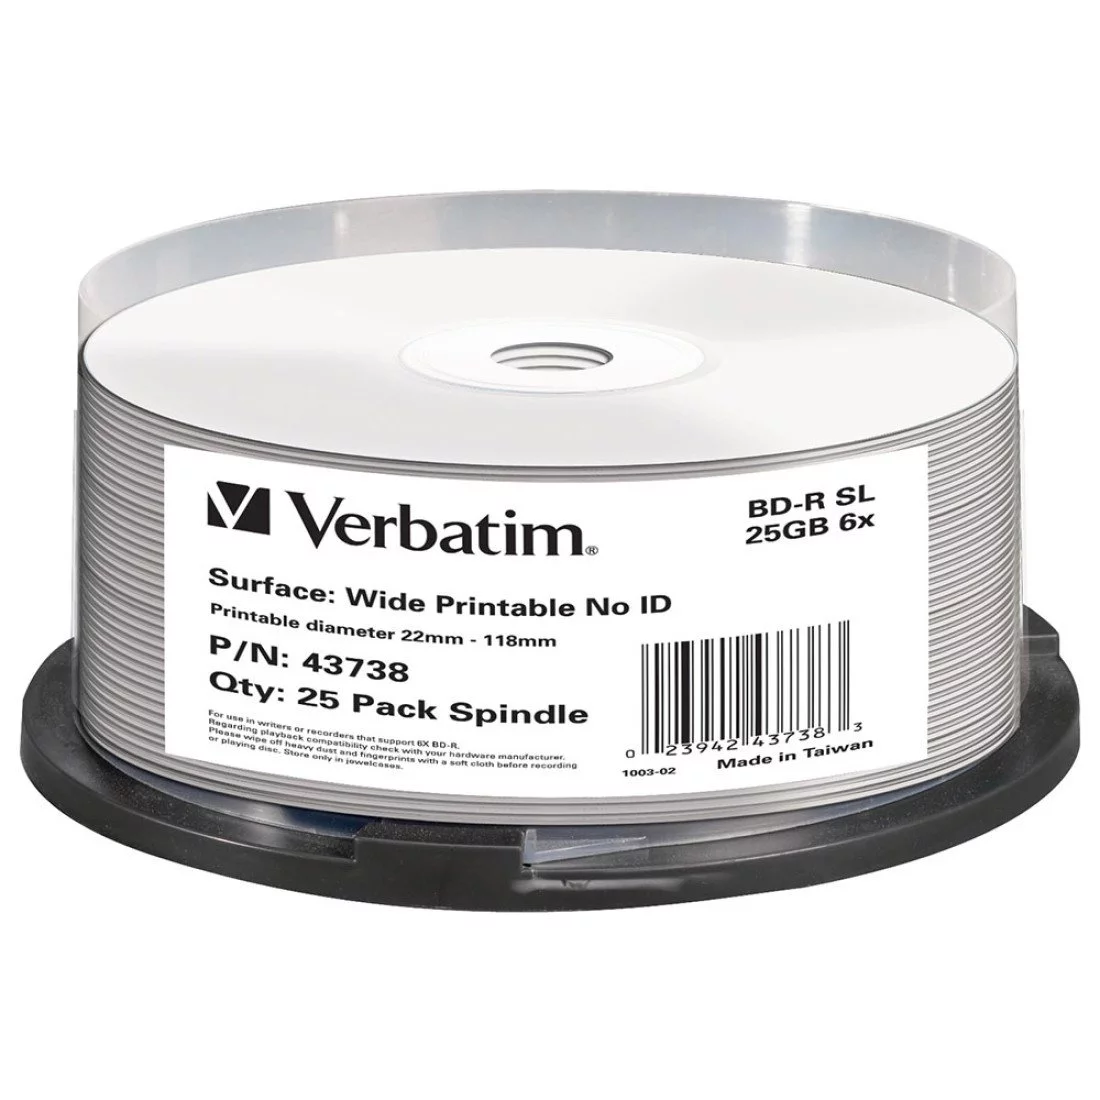 DVD vierge Verbatim DVD-R 16x (boite de 50) 43548 pas cher